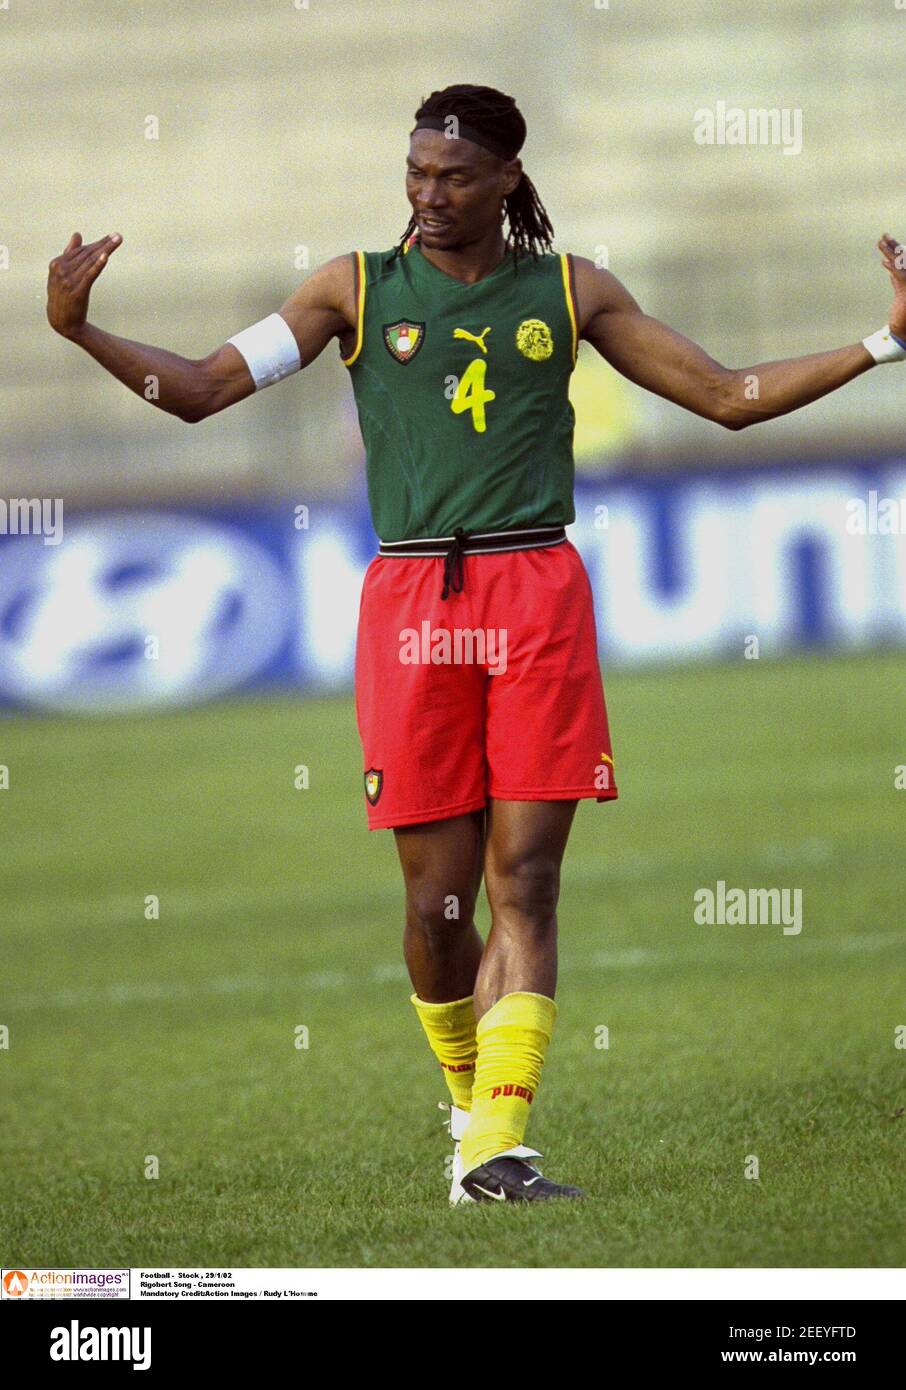 Fußball - Stock , 29/1/02 Rigobert Song - Kamerun Pflichtindiktion:Action  Images / Rudy L'Homme Stockfotografie - Alamy